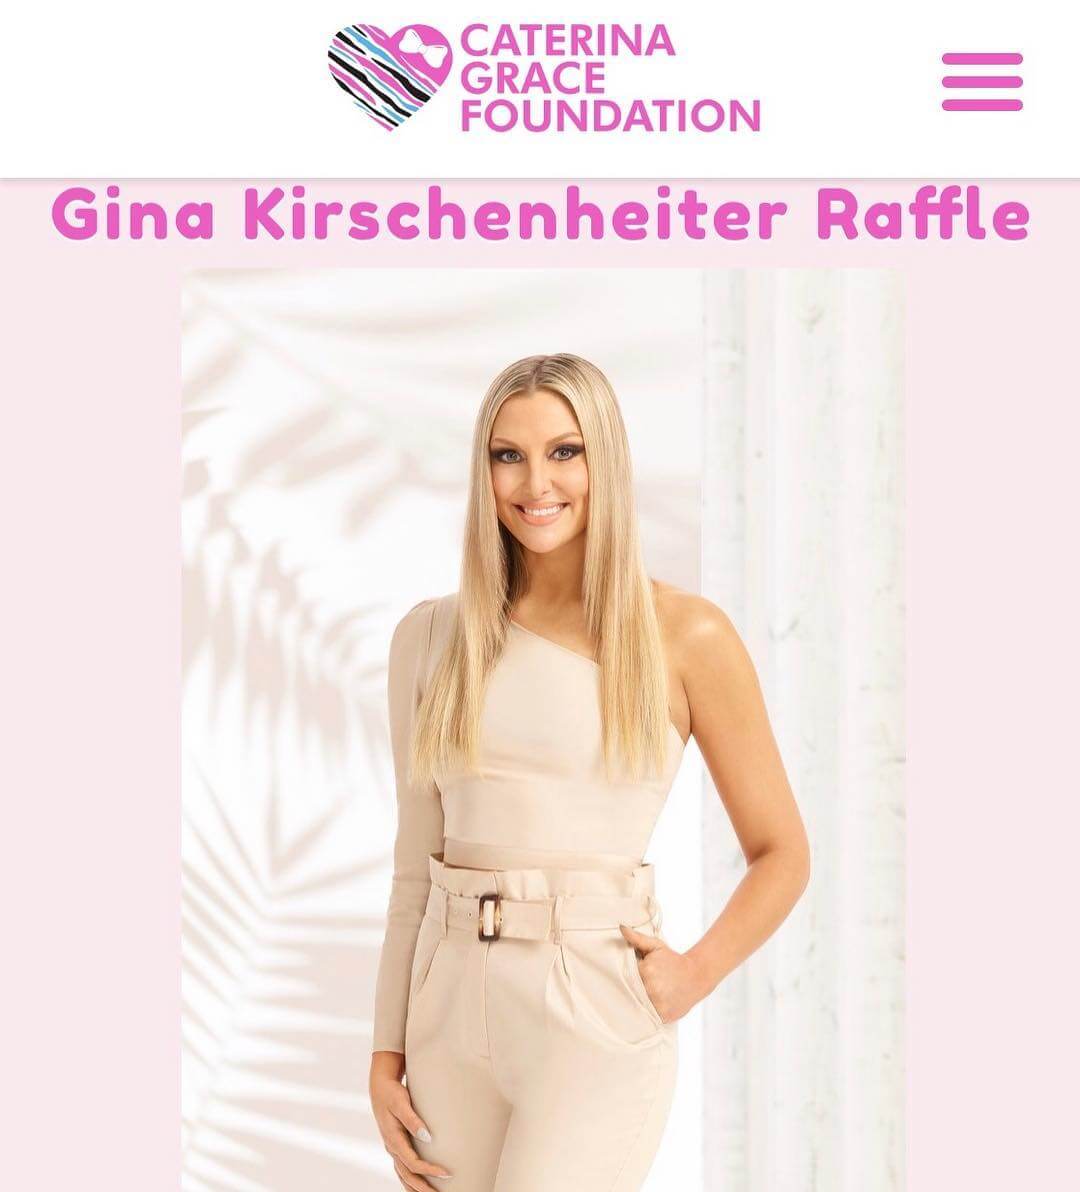 50 Hot Gina Kirschenheiter That Will Make Your Day Better.